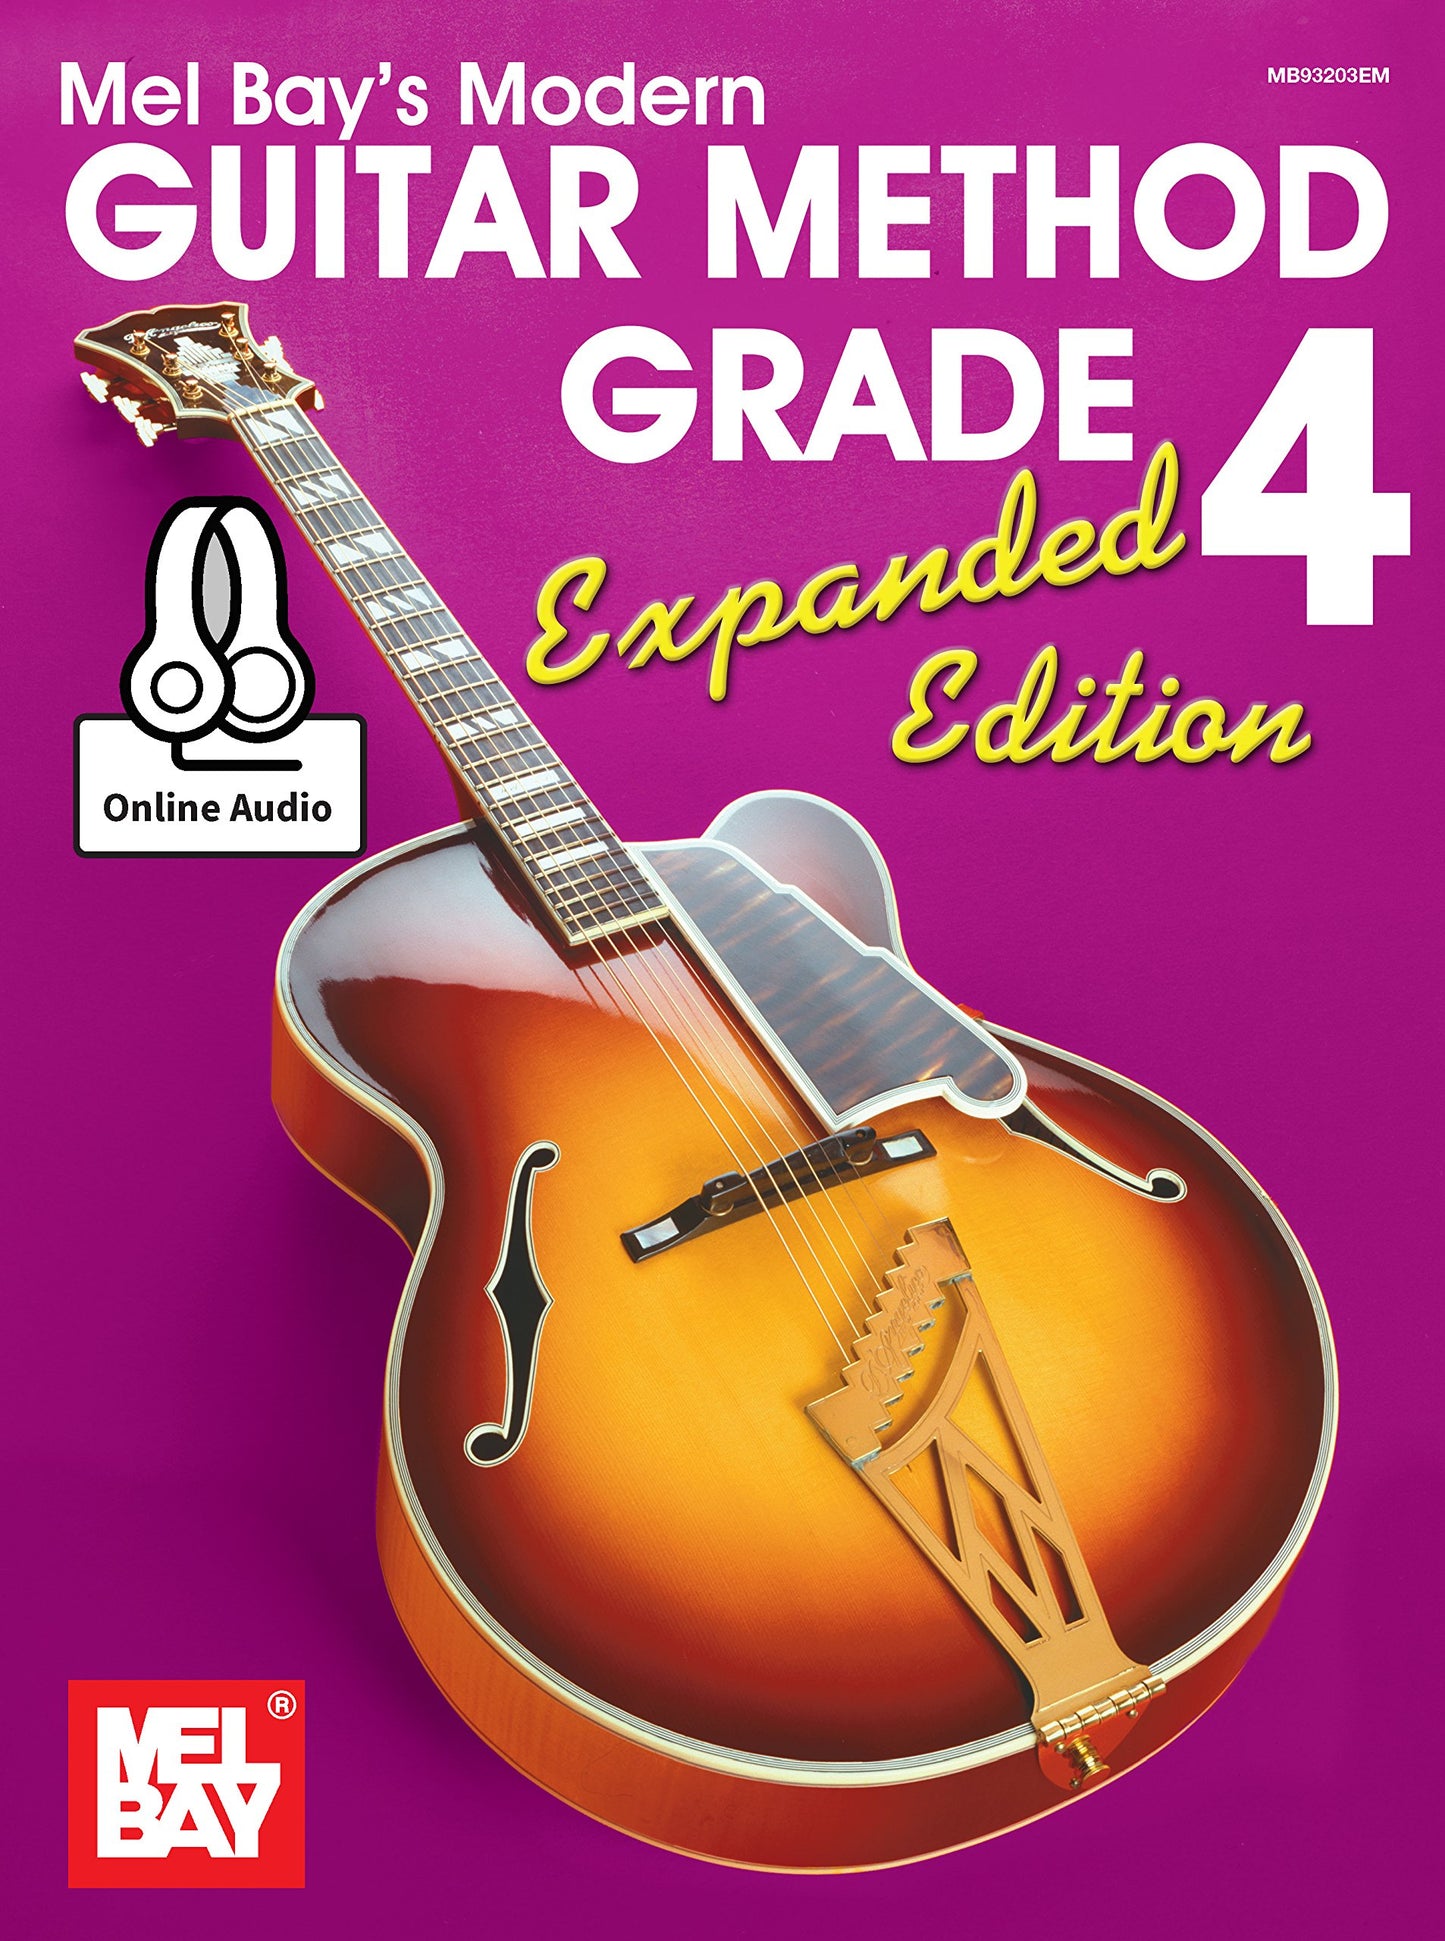 Mel Bay's Modern Guitar Method Grade 4 - Expanded Edition